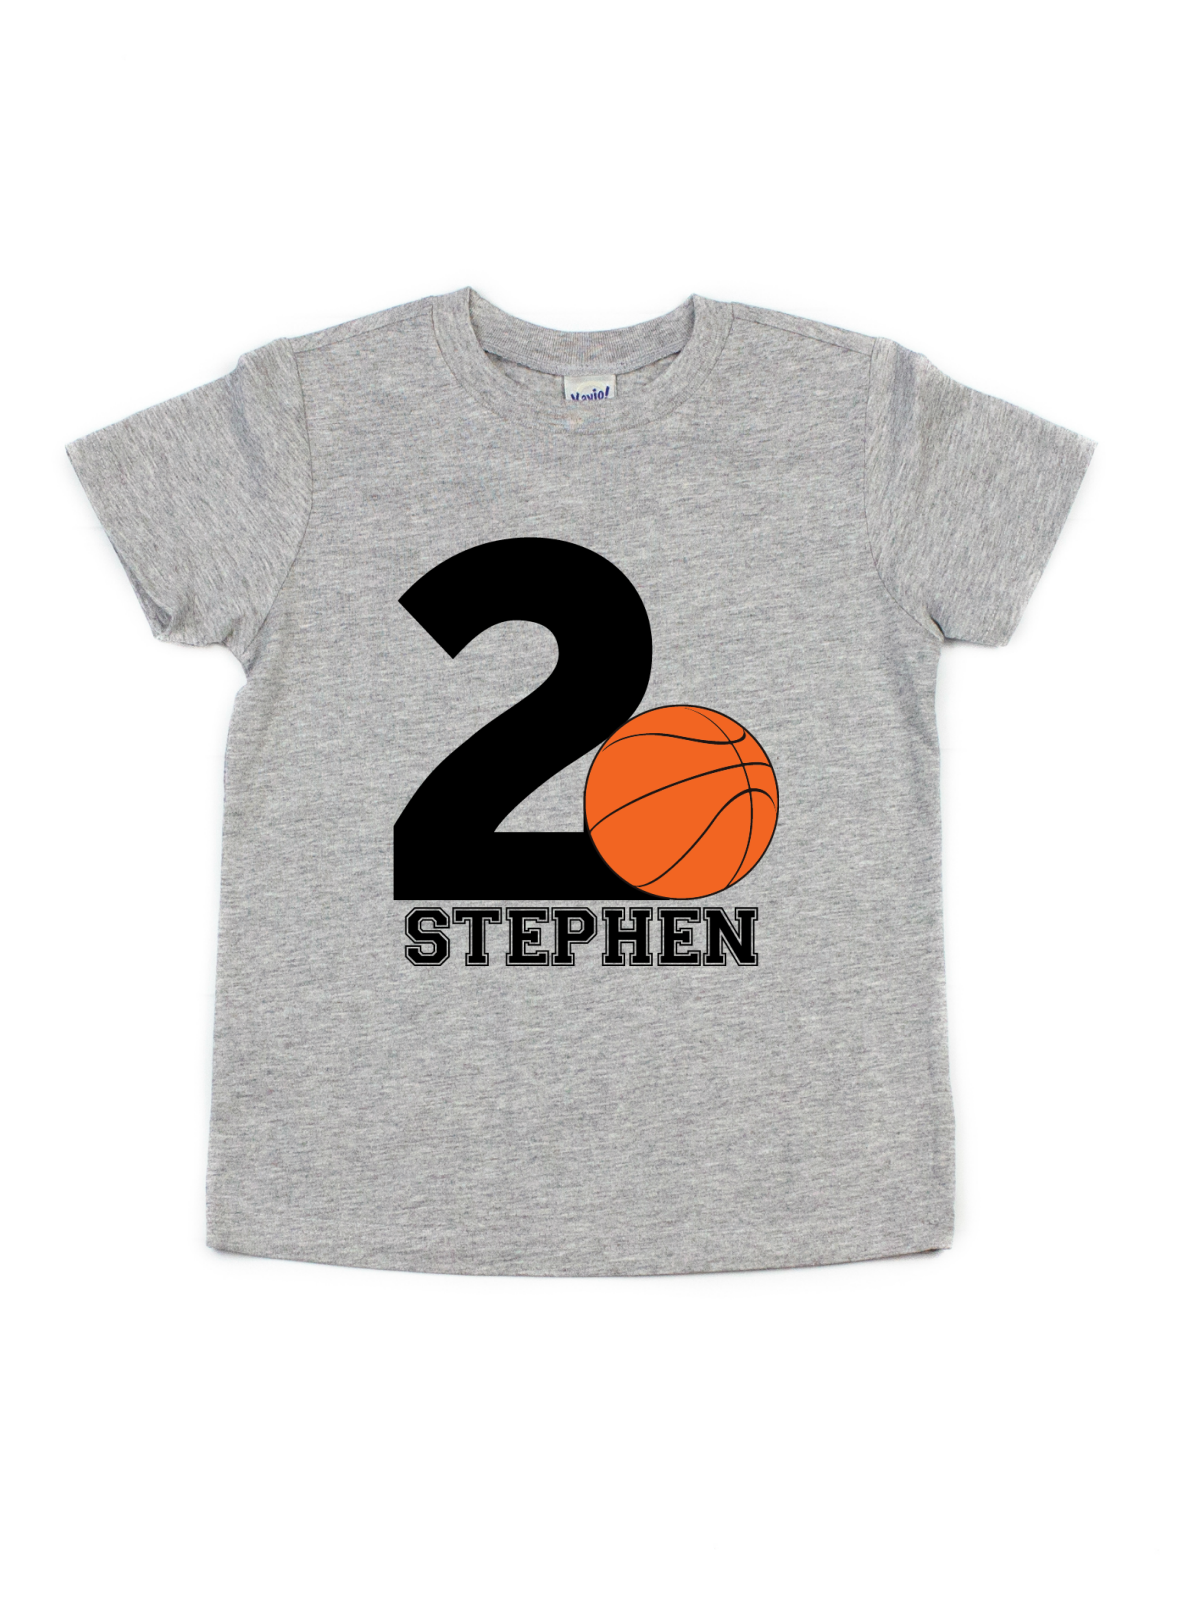 custom basketball birthday shirt for boys in gray